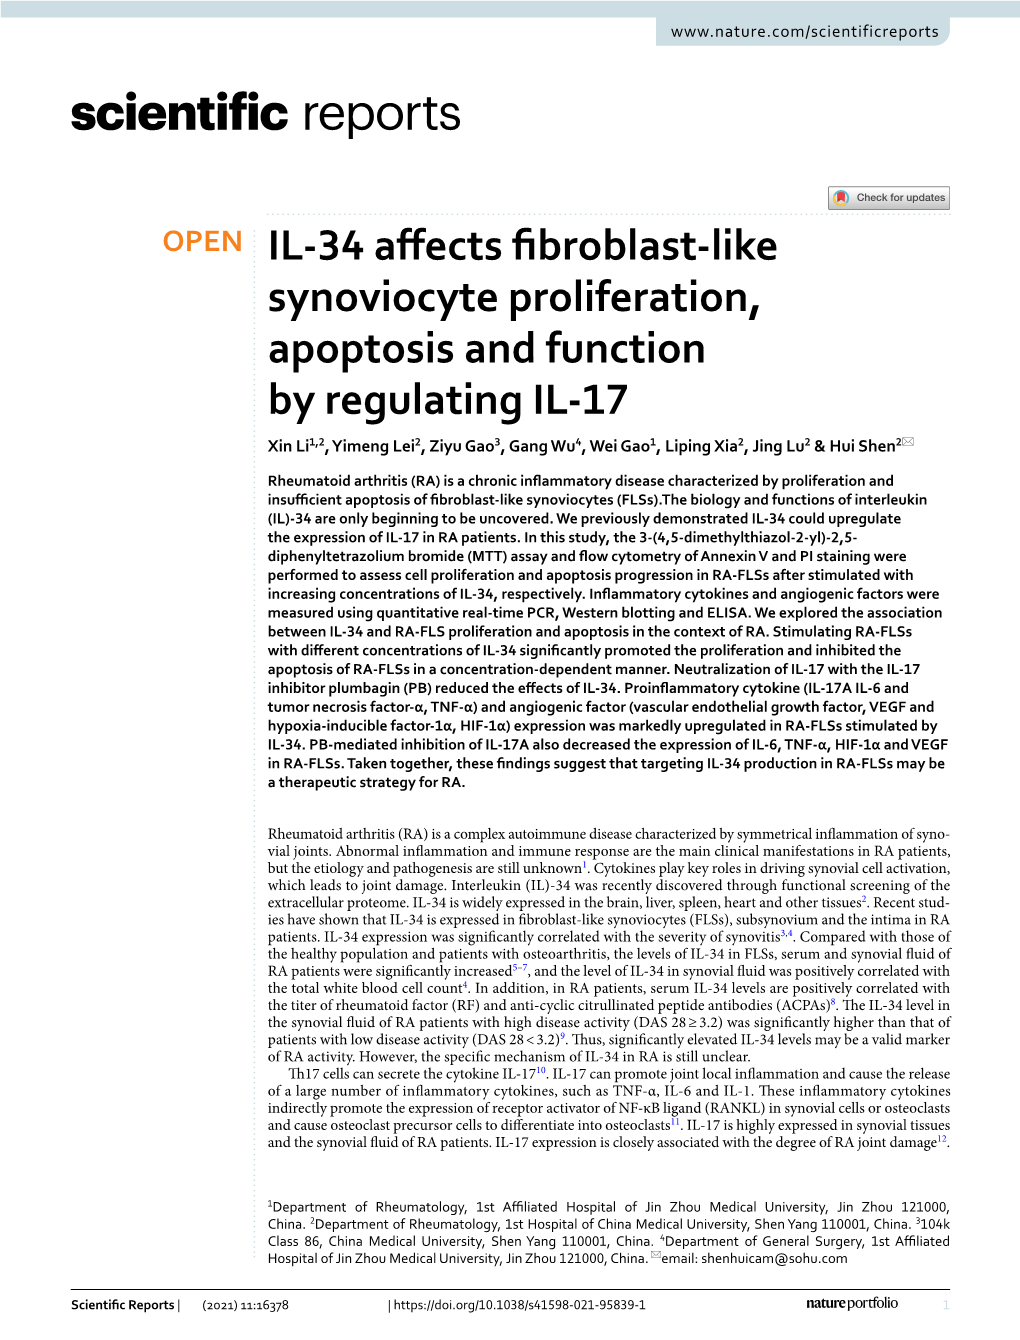 IL-34 Affects Fibroblast-Like Synoviocyte Proliferation, Apoptosis And